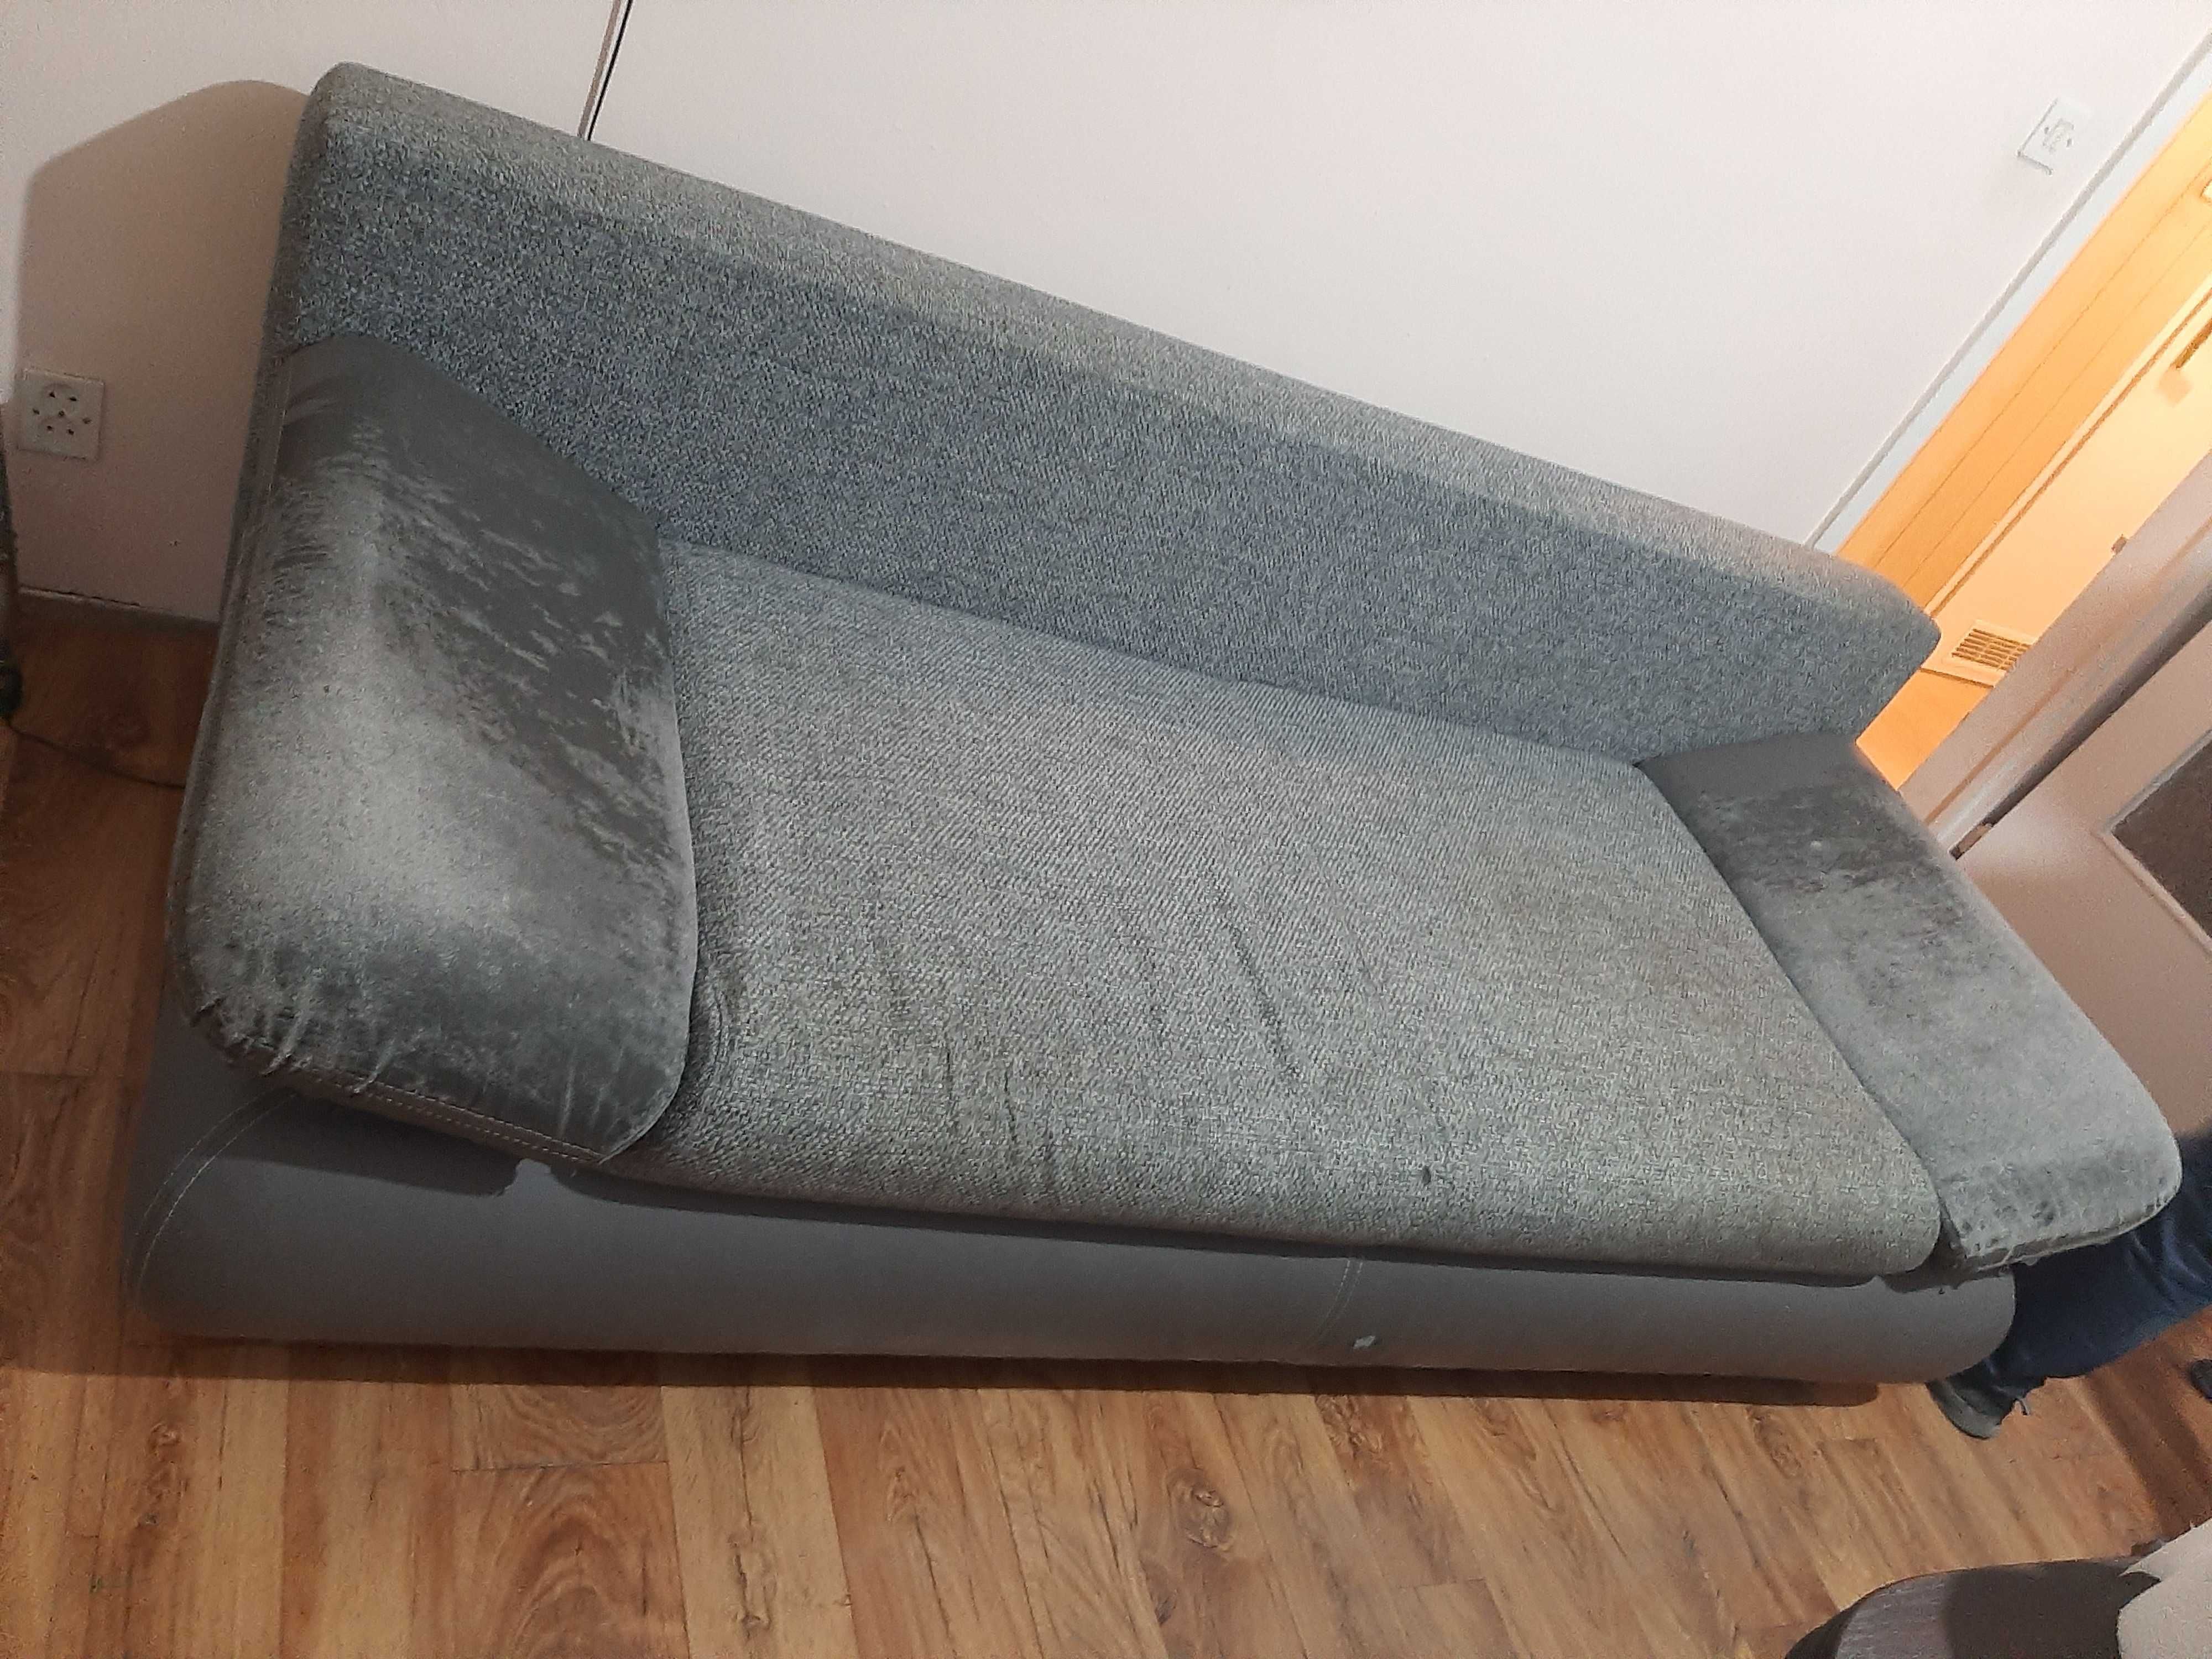 Wersalka sofa rozkladana